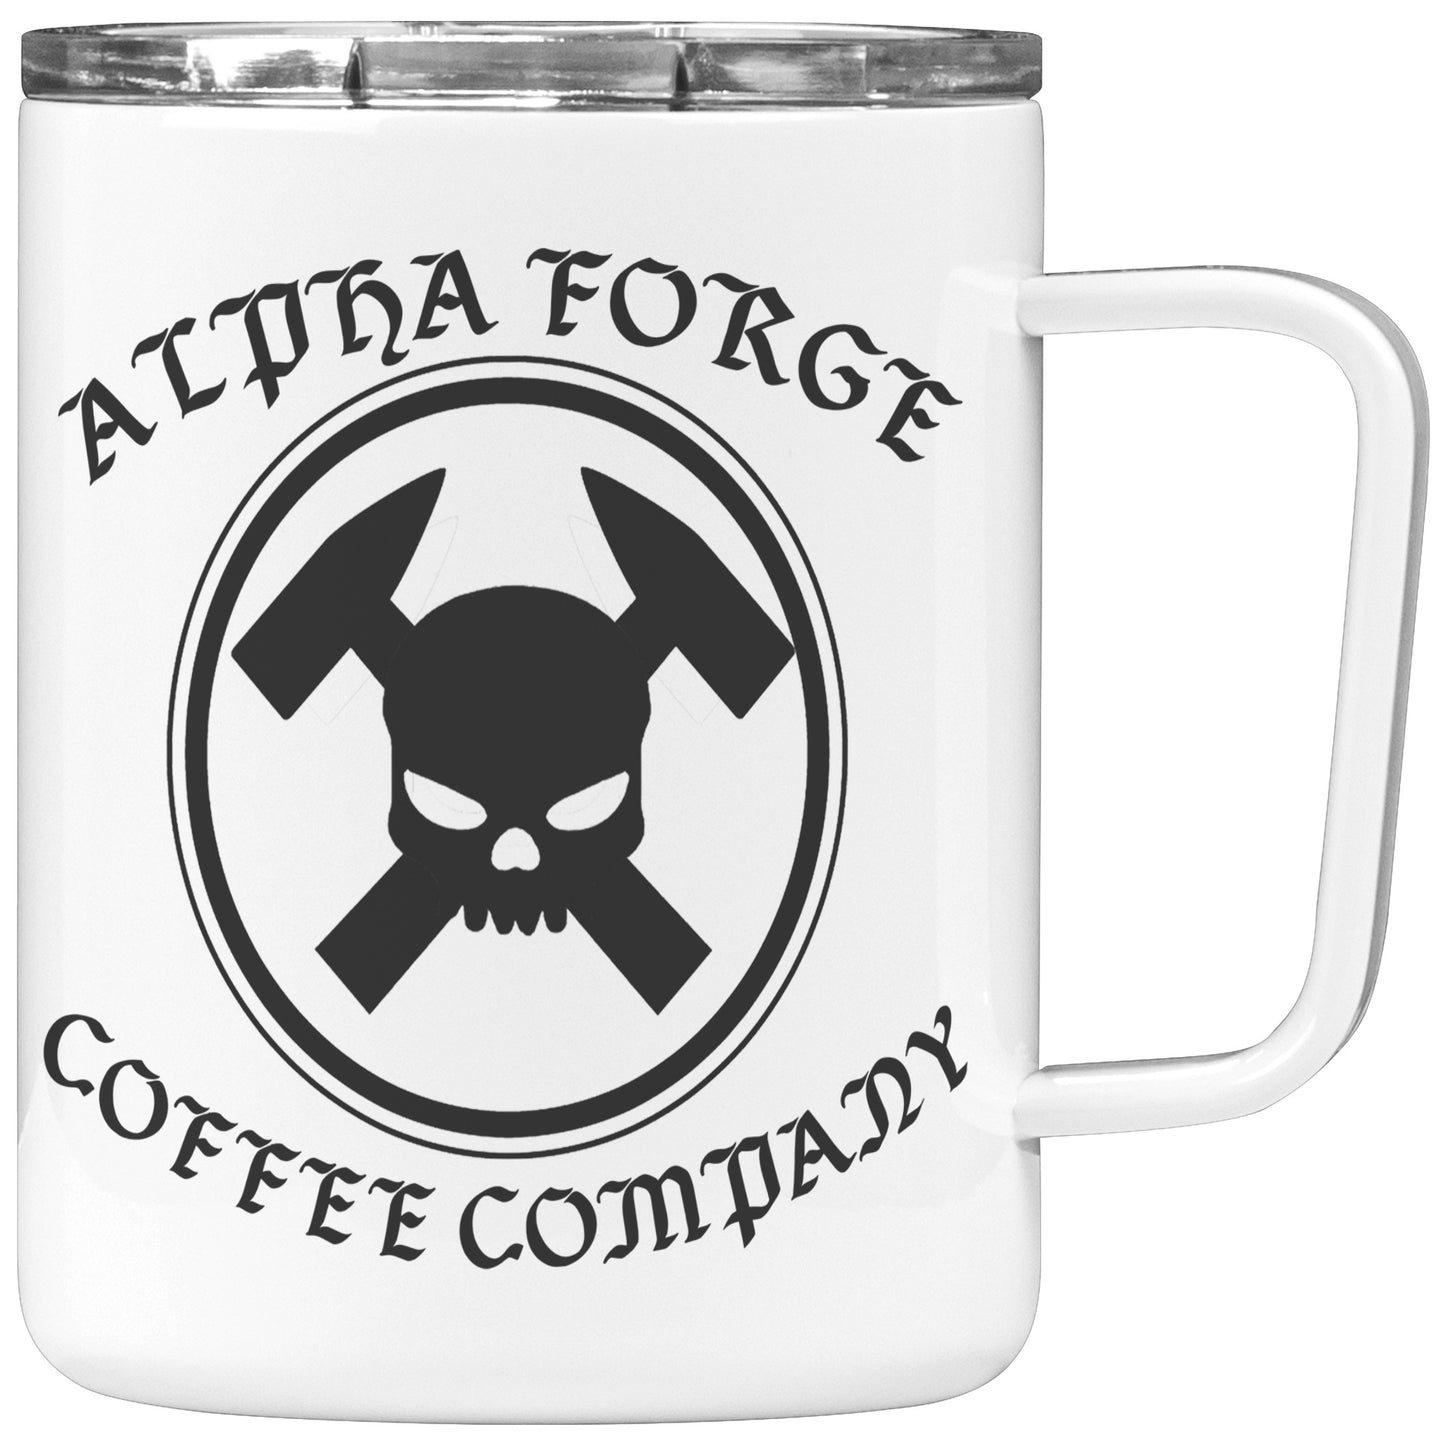 Alpha Forge Coffee Co. 10oz Insulated Coffee Mug